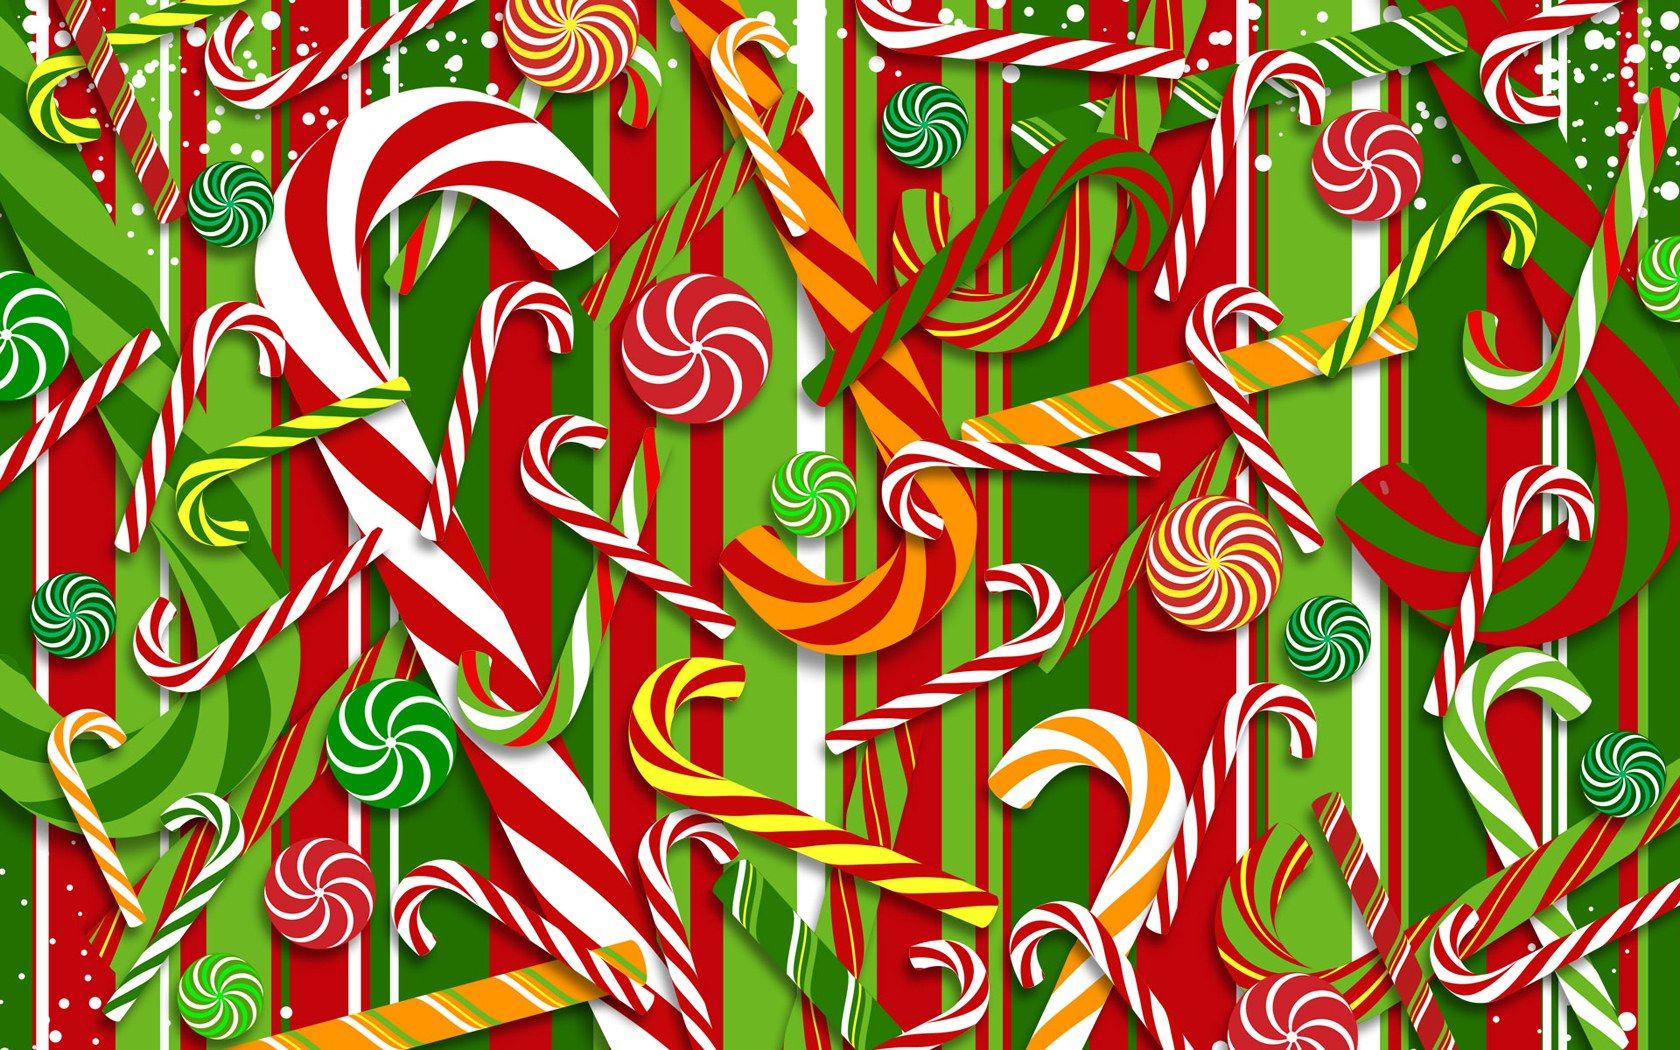 Festive Christmas CG Christmas illustration 1680x1050 NO.19 Desktop Wallpaper